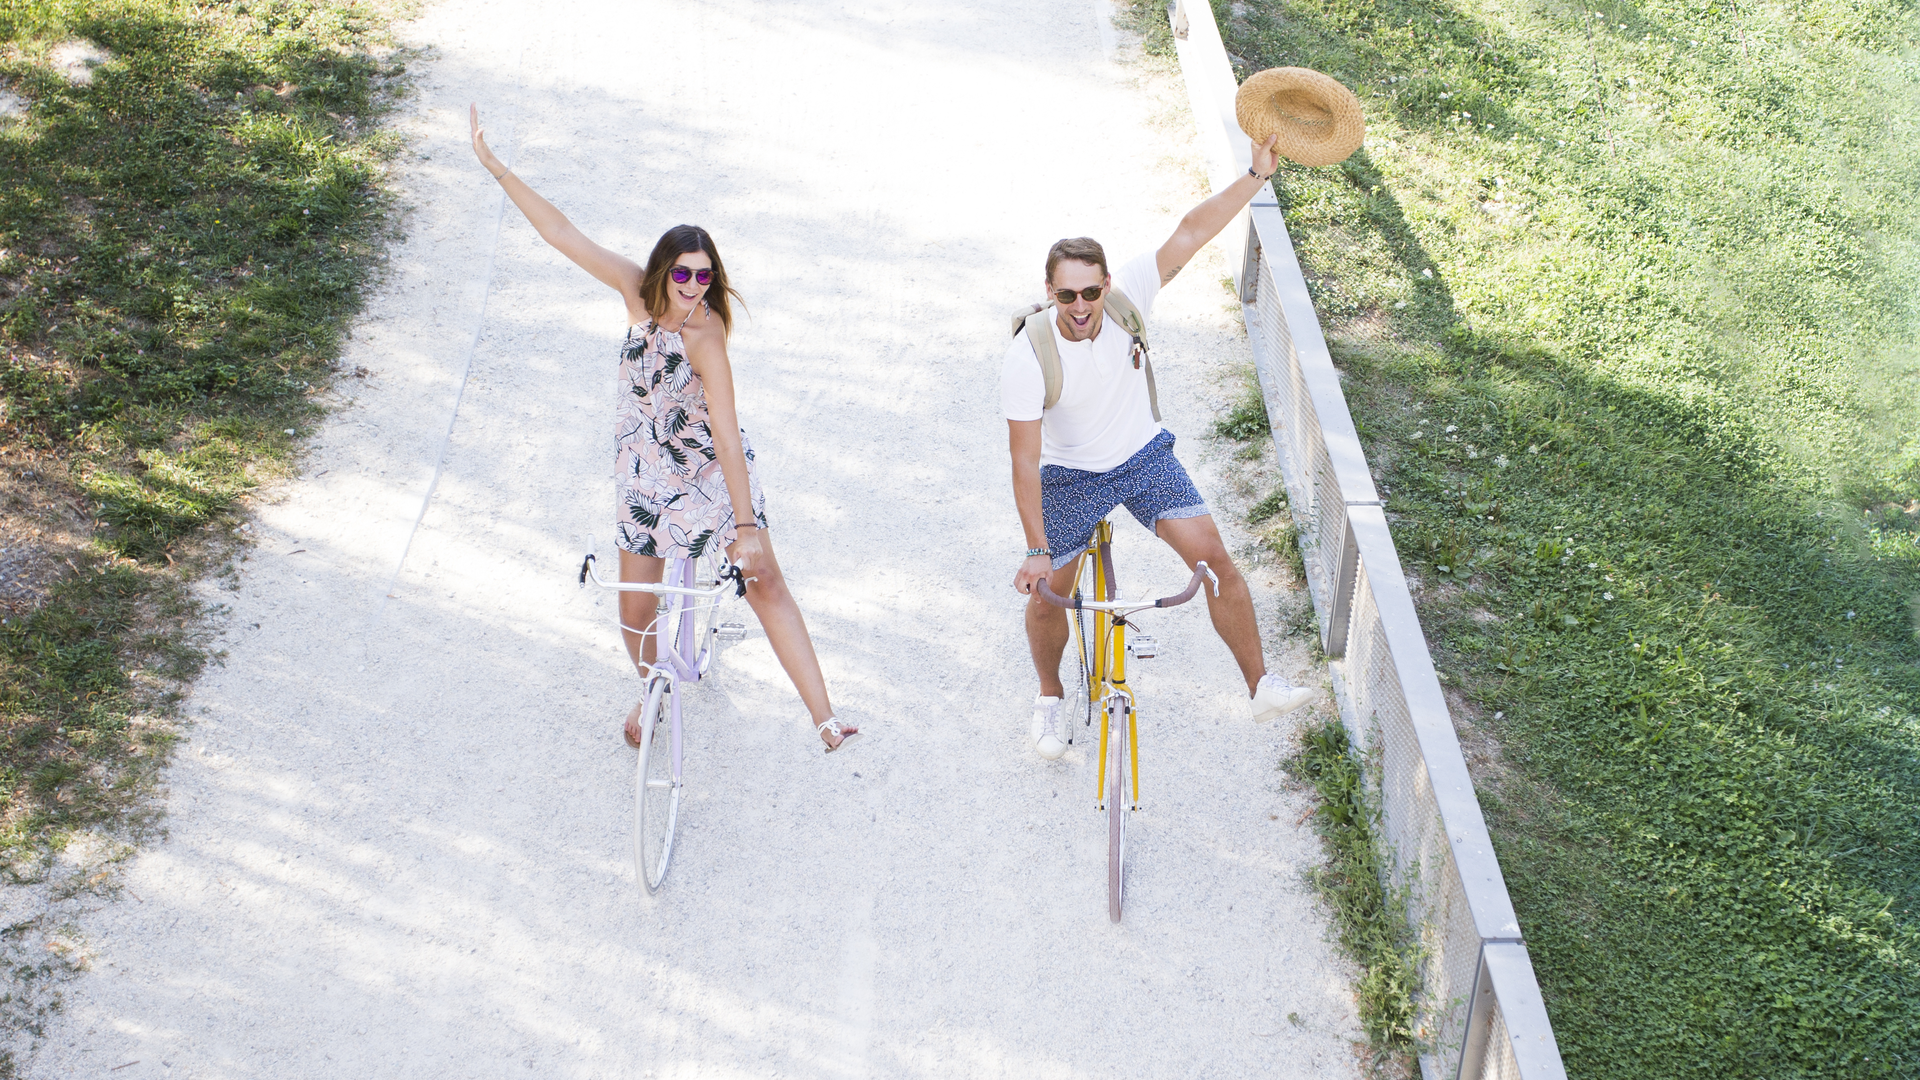 A spontaneous romantic tourist couple riding a bike on a cycle lane.